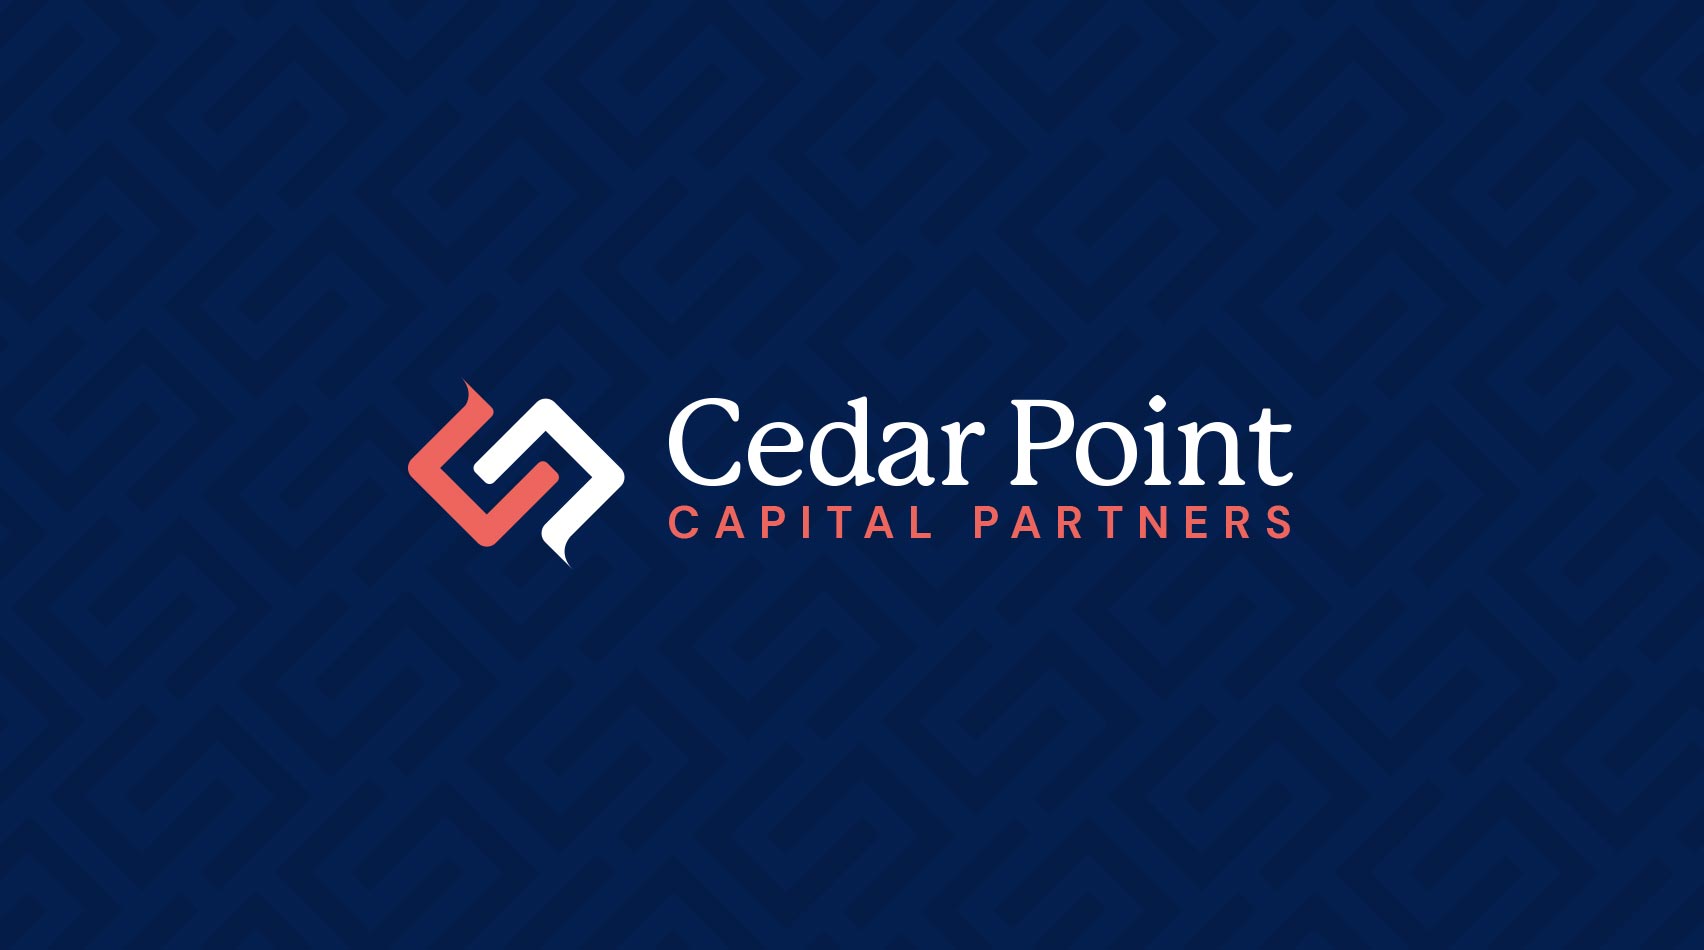 The Cedar Point Capital Partners logo on a blue pattern background